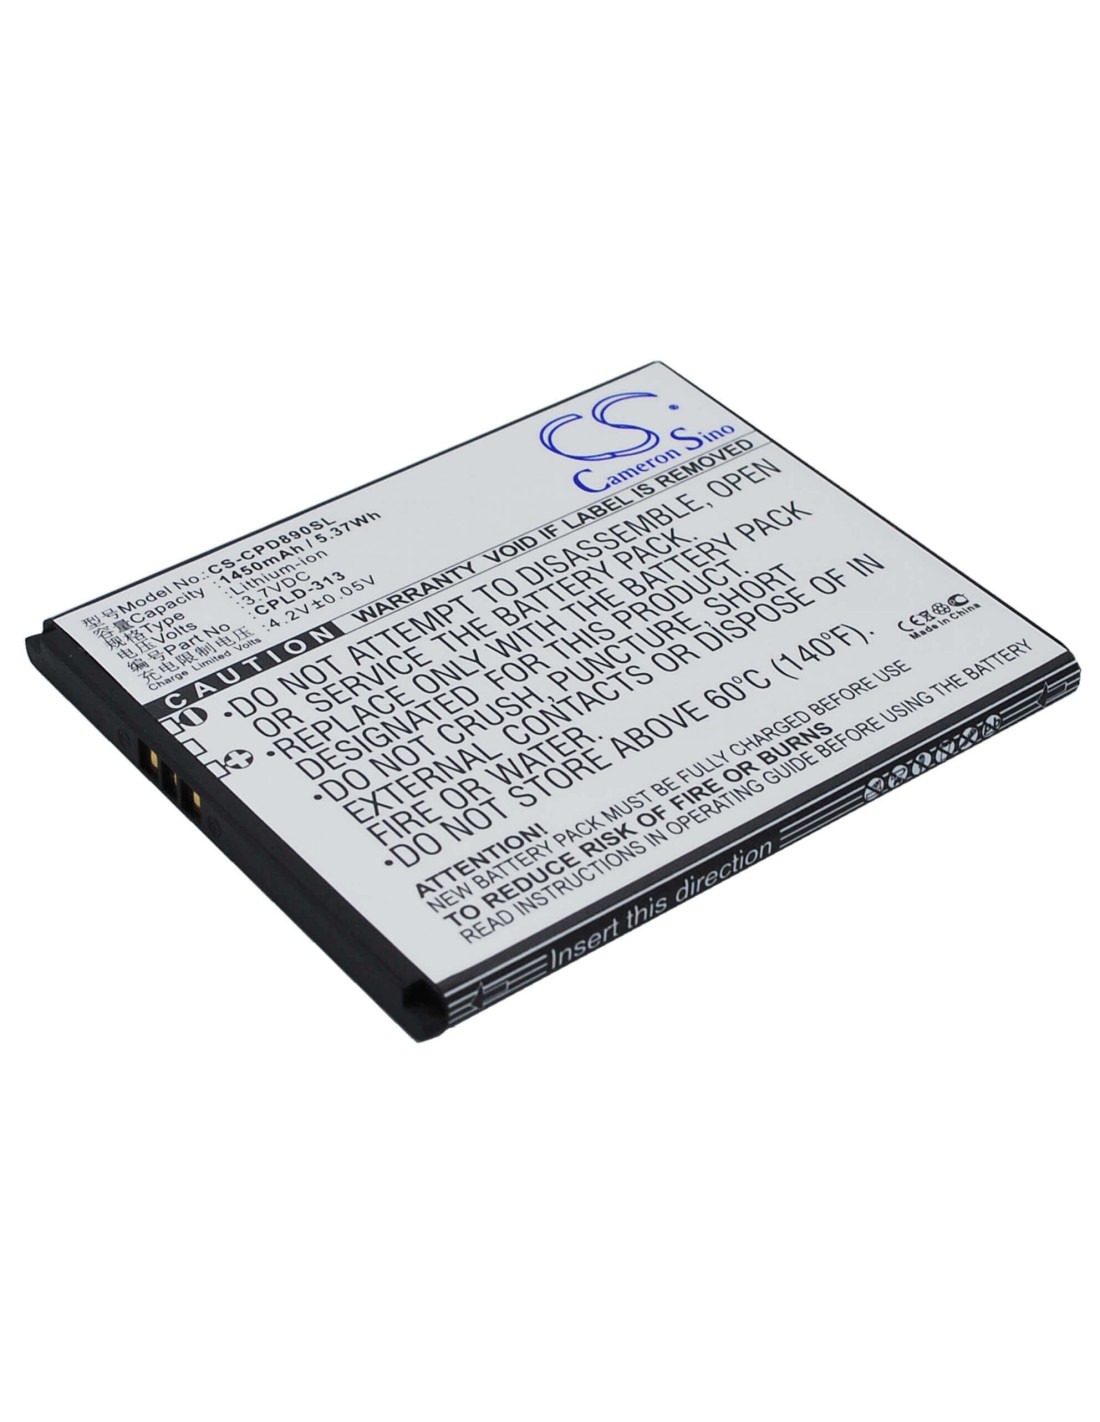 Battery for Coolpad 8908, 4 mini 3.7V, 1450mAh - 5.37Wh